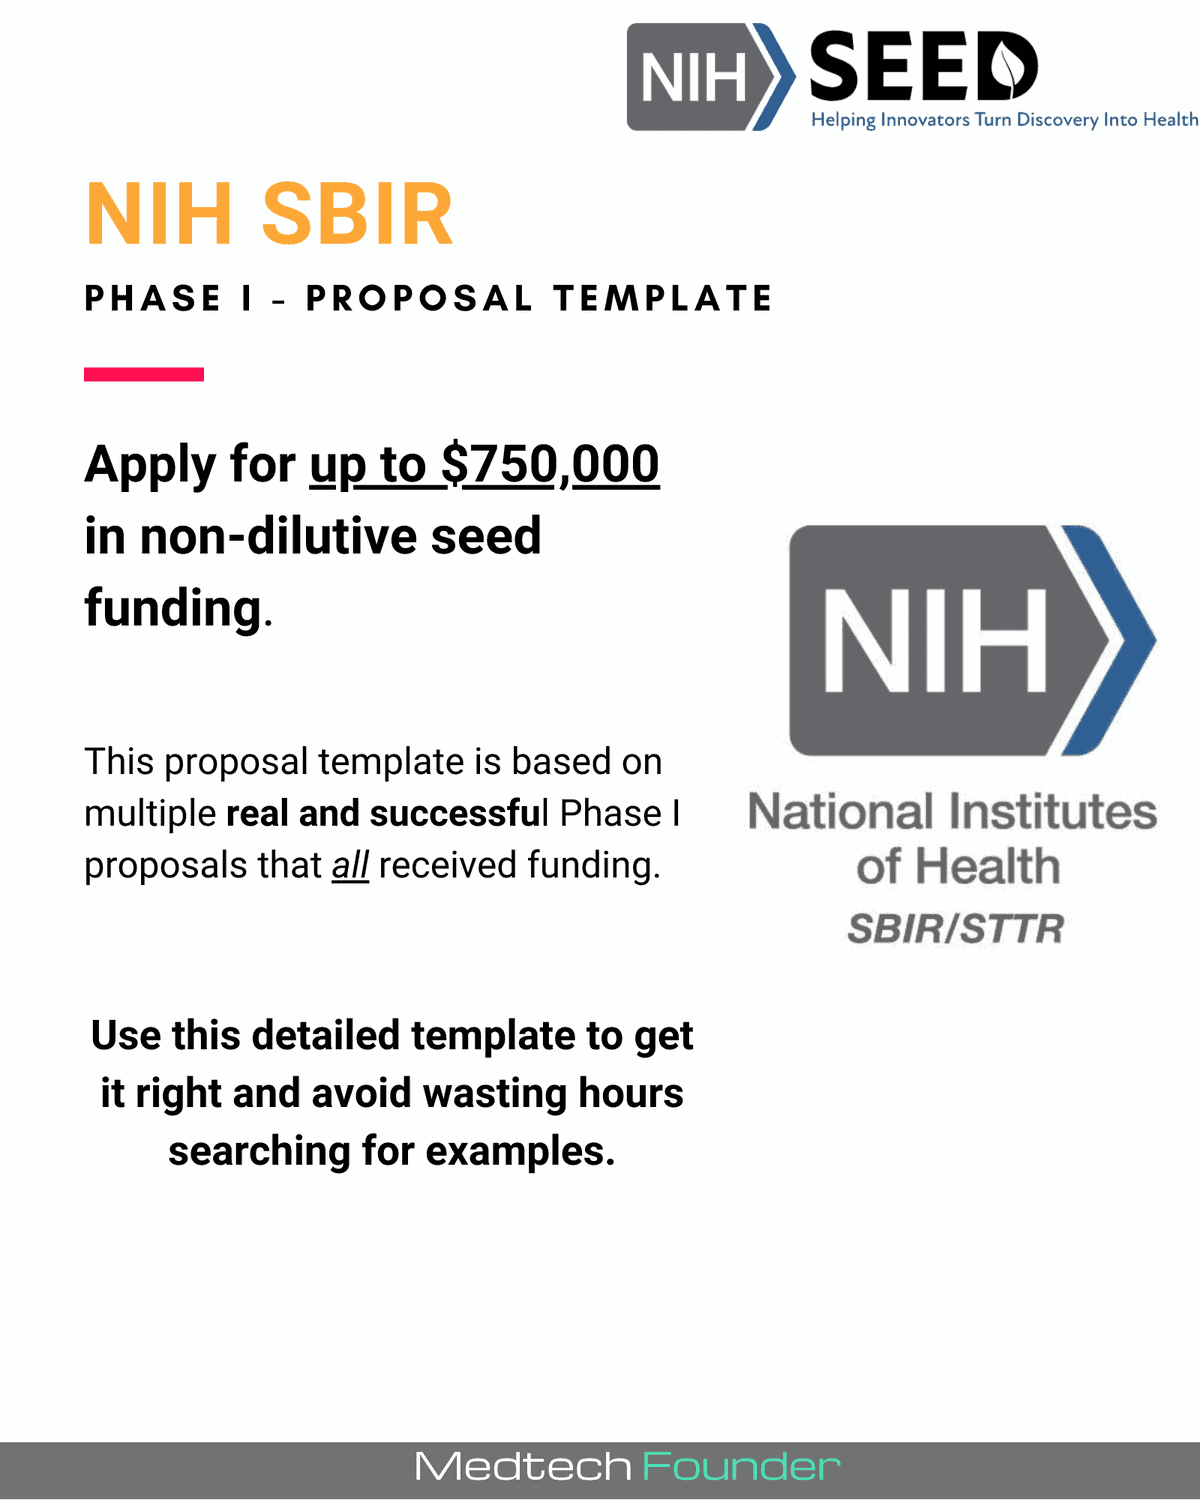 NIH SBIR Phase I Template